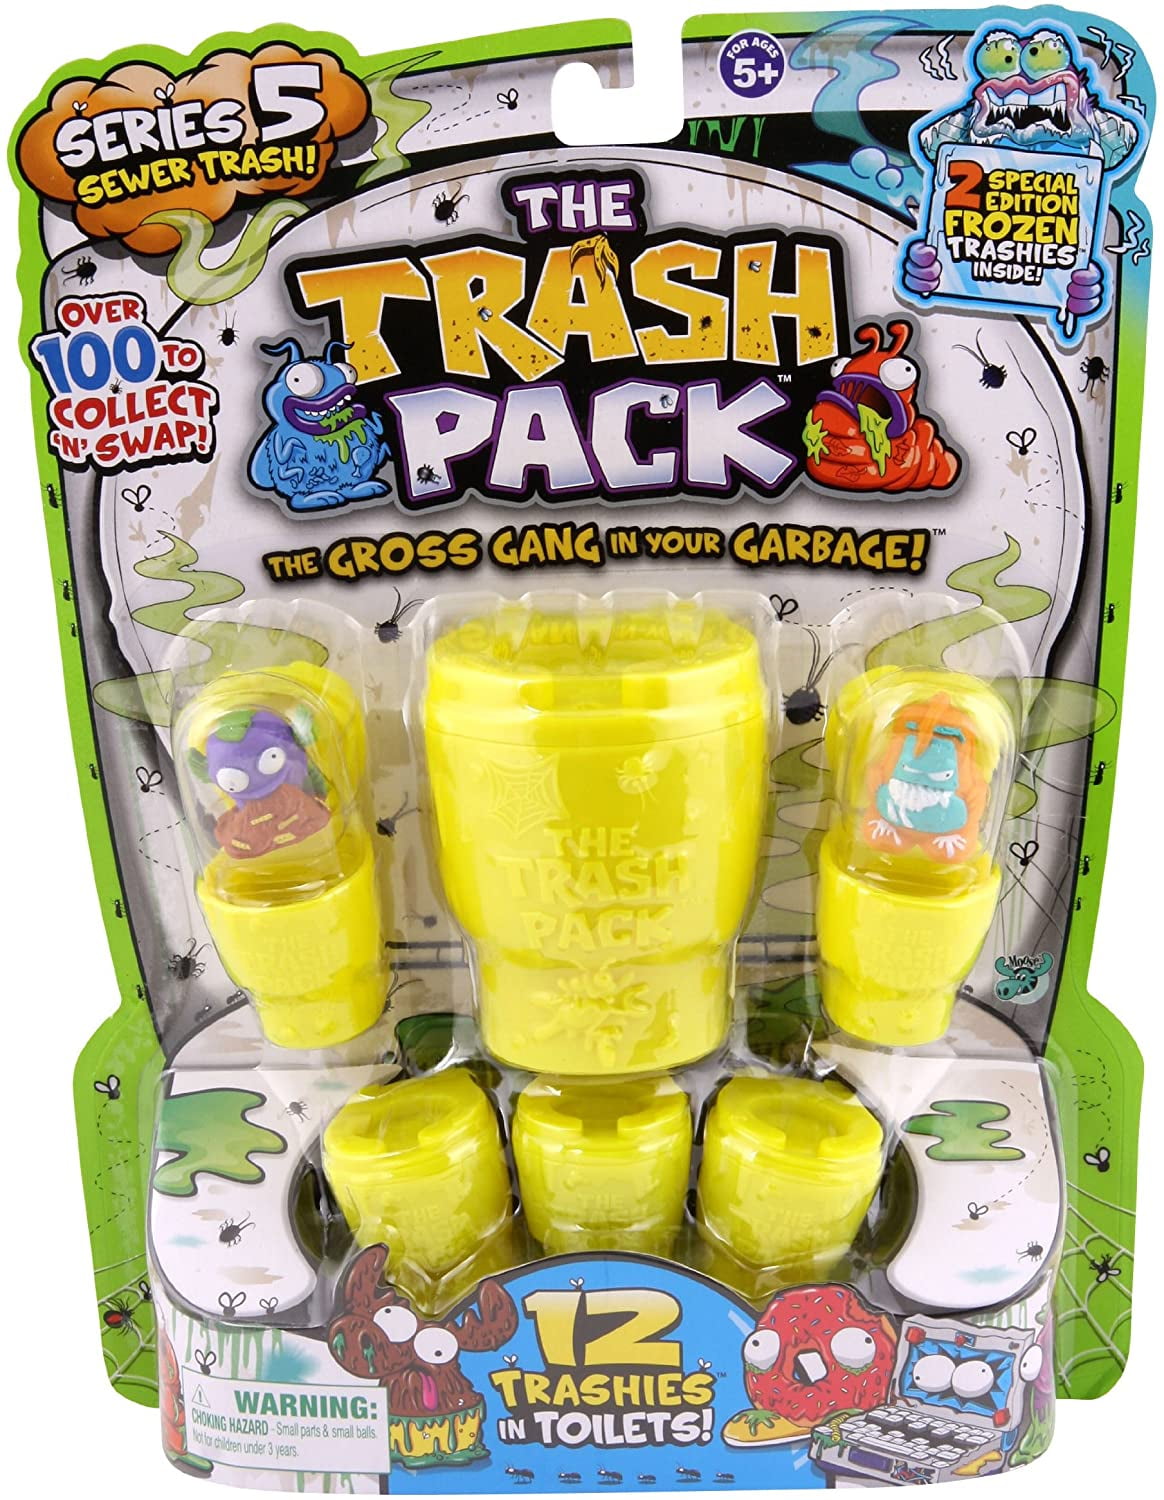 Random figures The Trash Pack Series 5 Sewer Trash 12 Trashies in Toilet Pack 